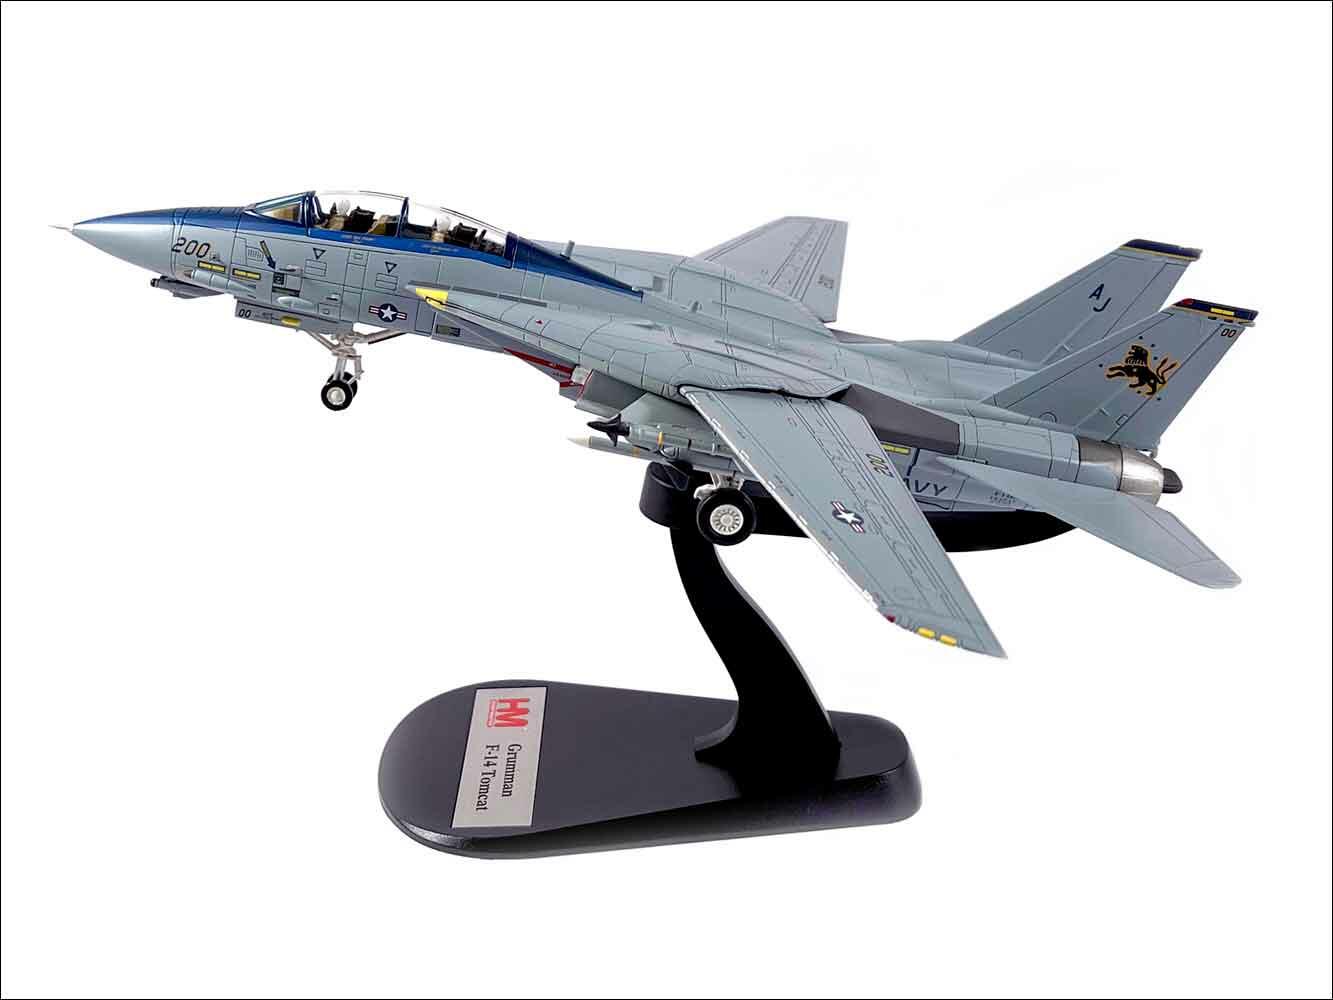 F-14 Tomcat display aircraft model